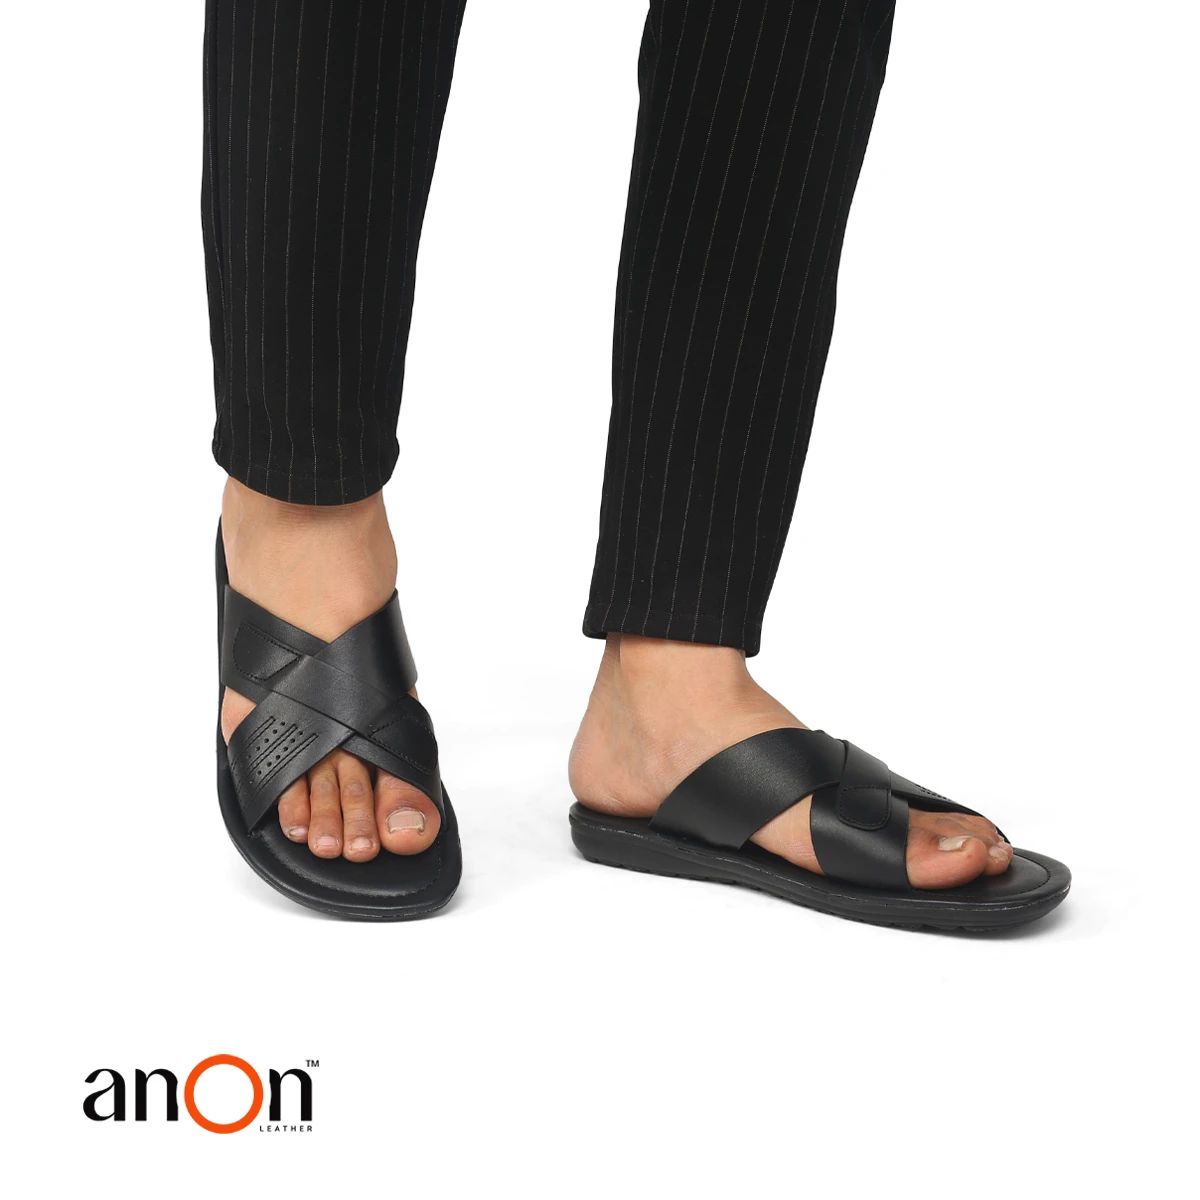 ANON Leather X Hawai Sandal S112